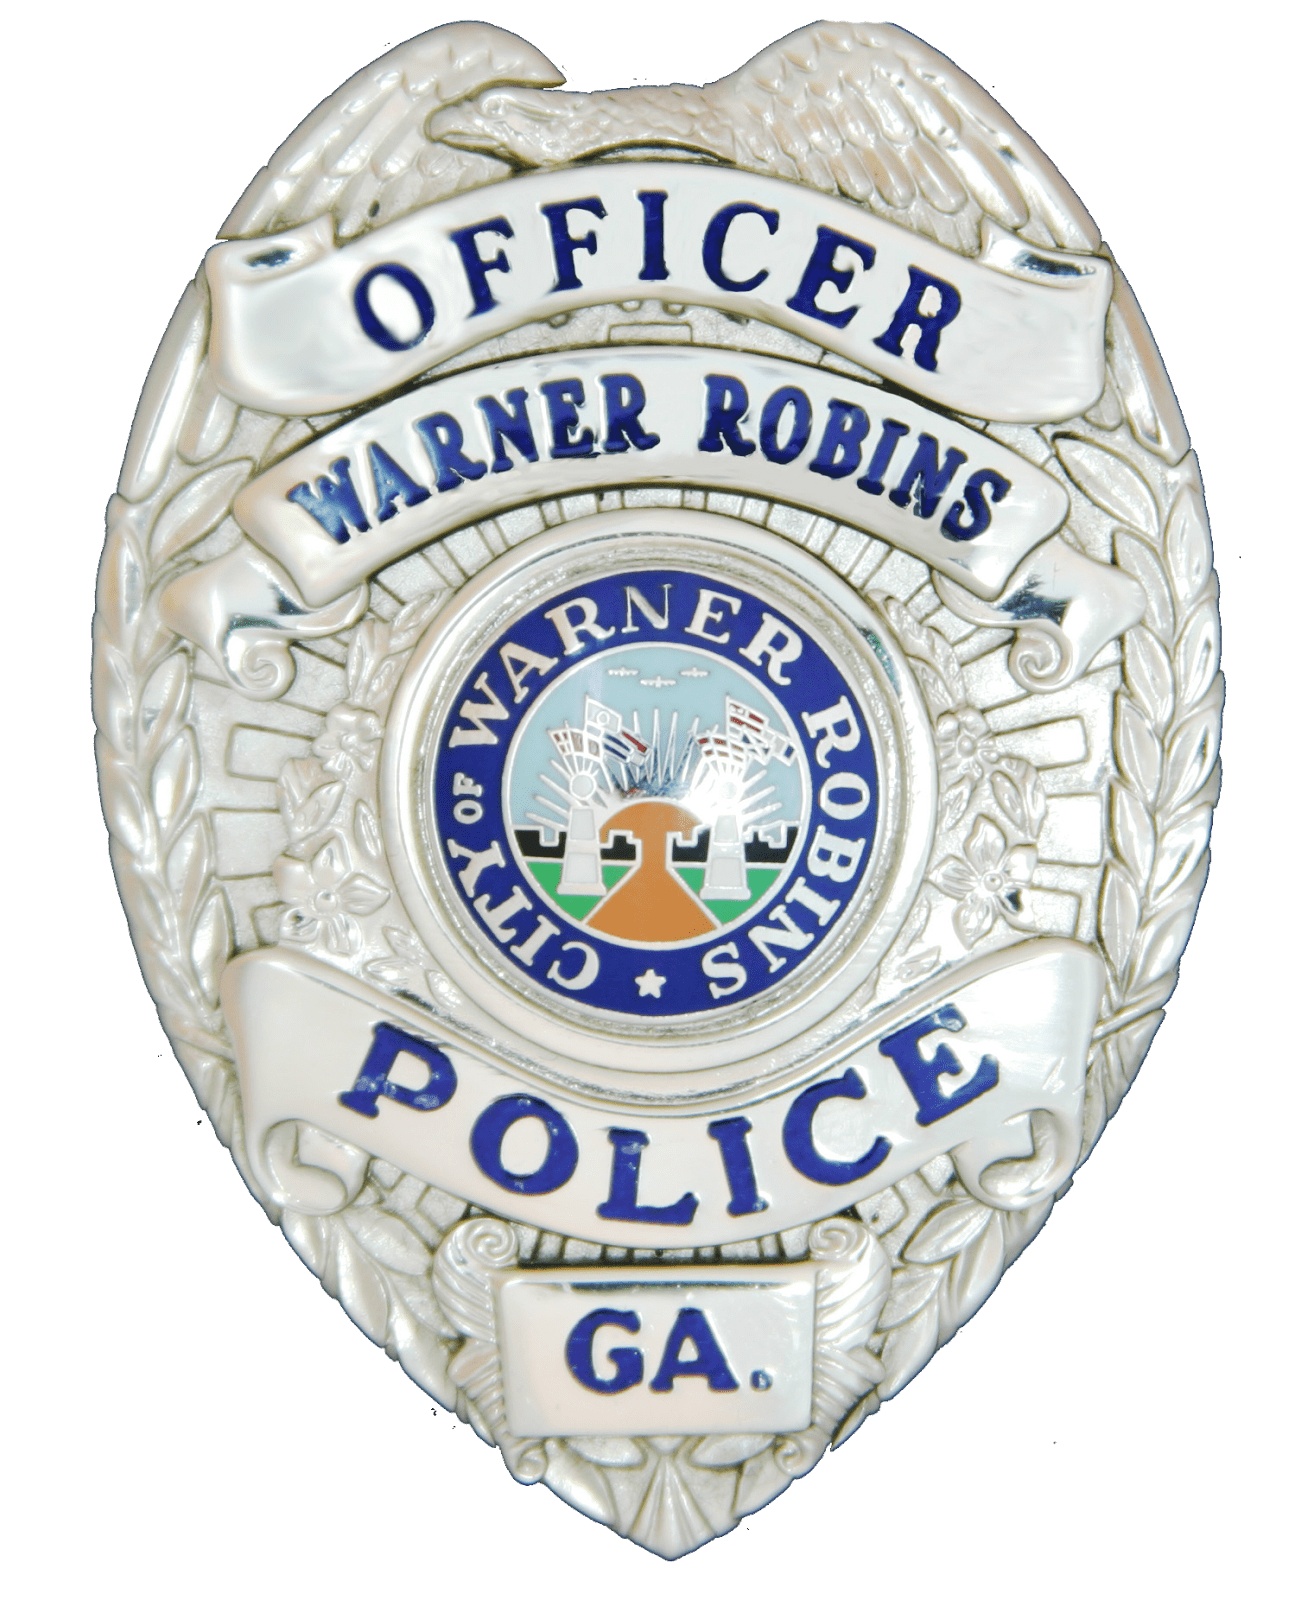 Police Badge PNG Transparent Image